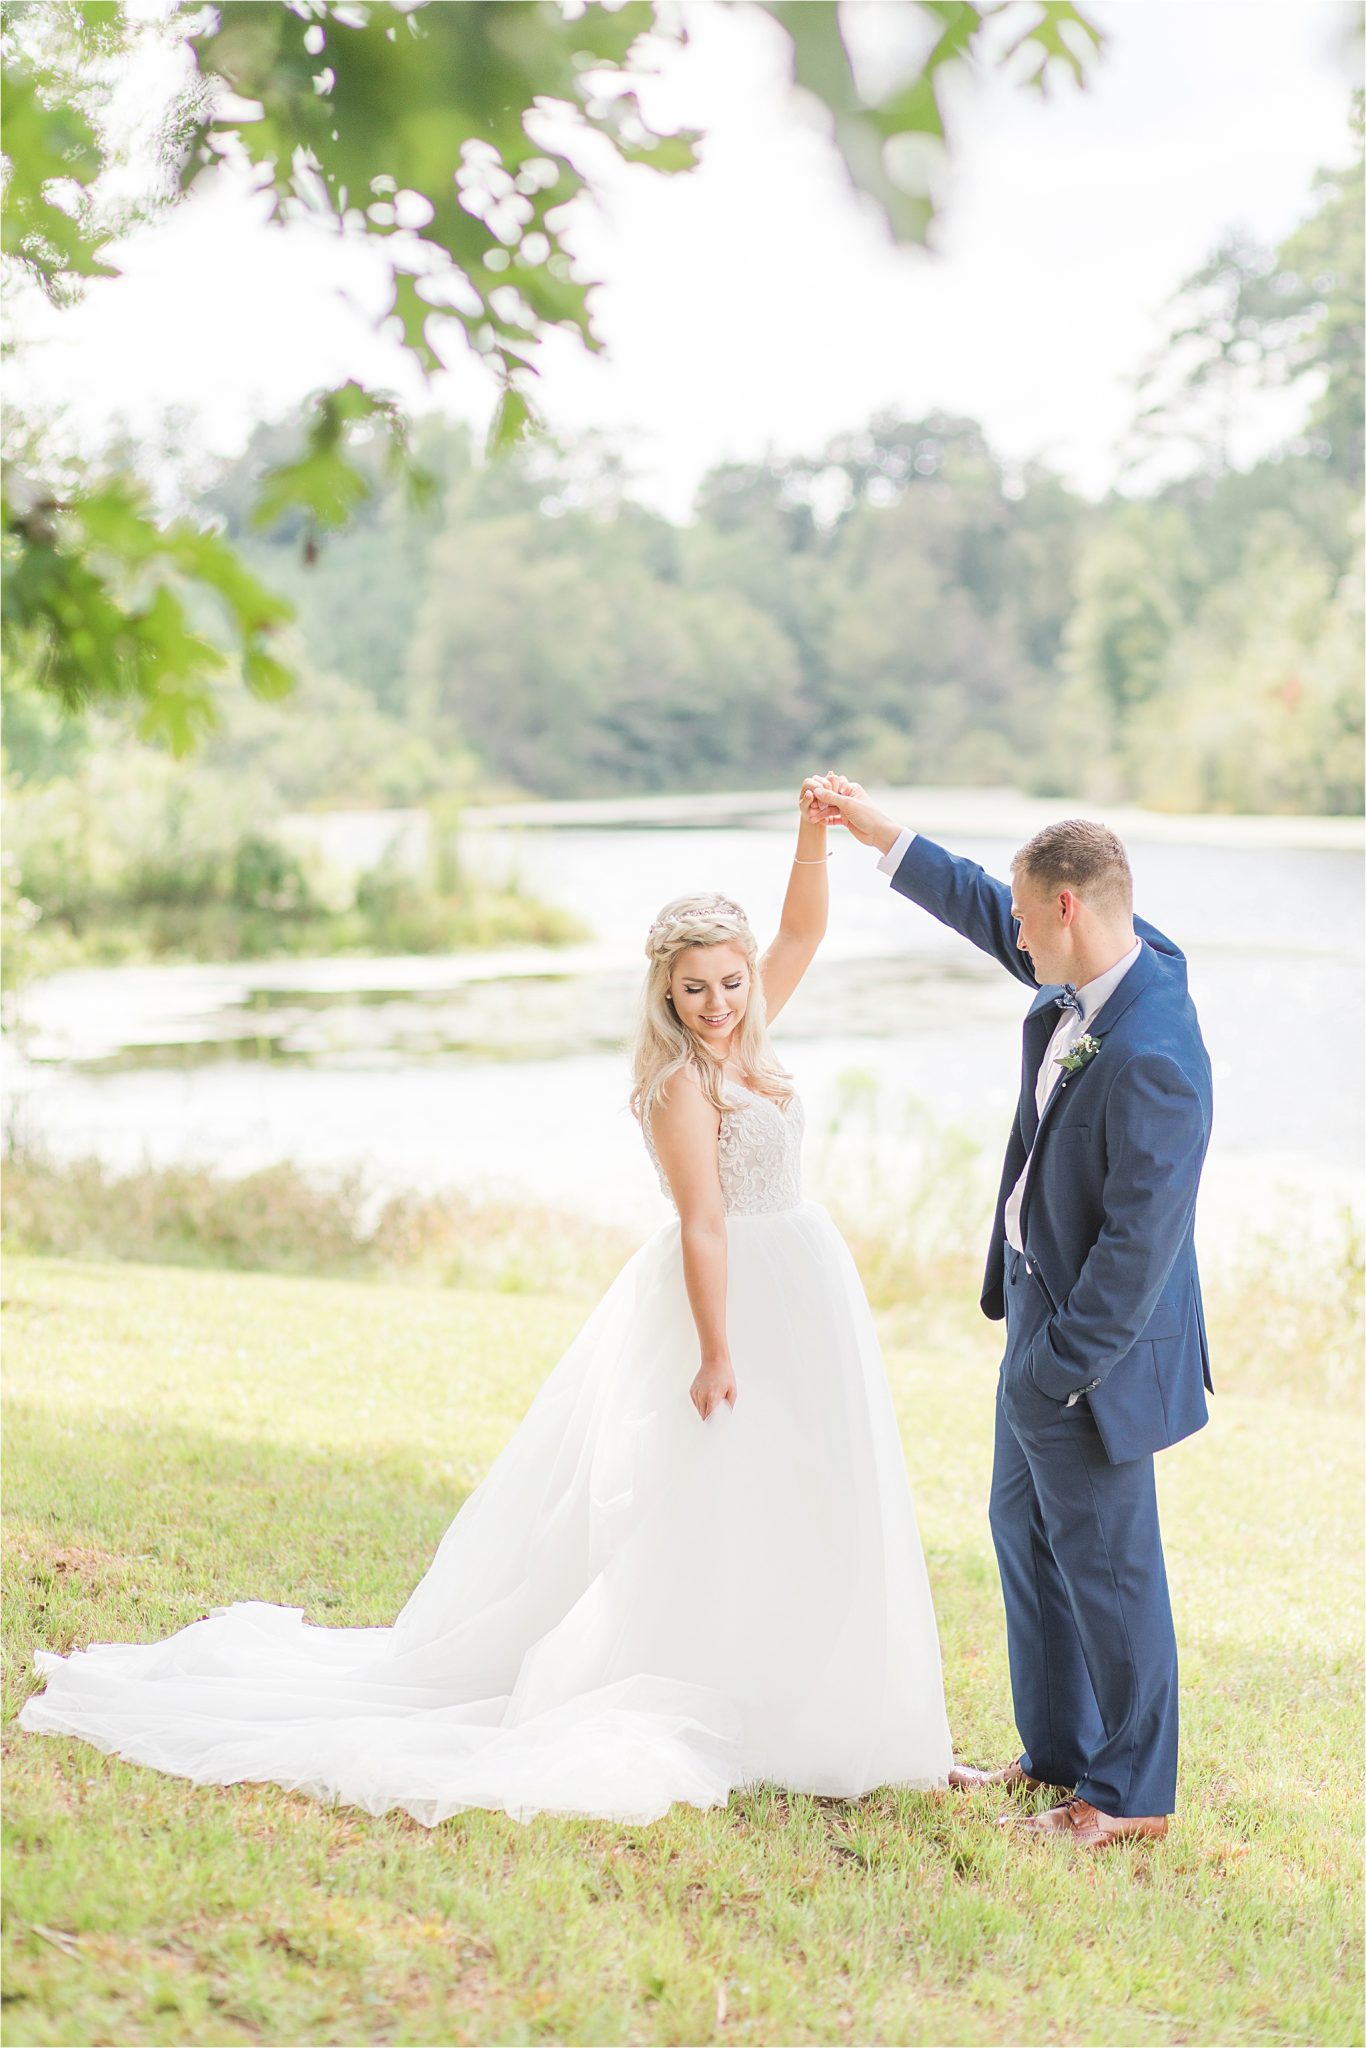 bridal-groom-portraits-photos-blue-suit-bow-tie-first-look-ideas